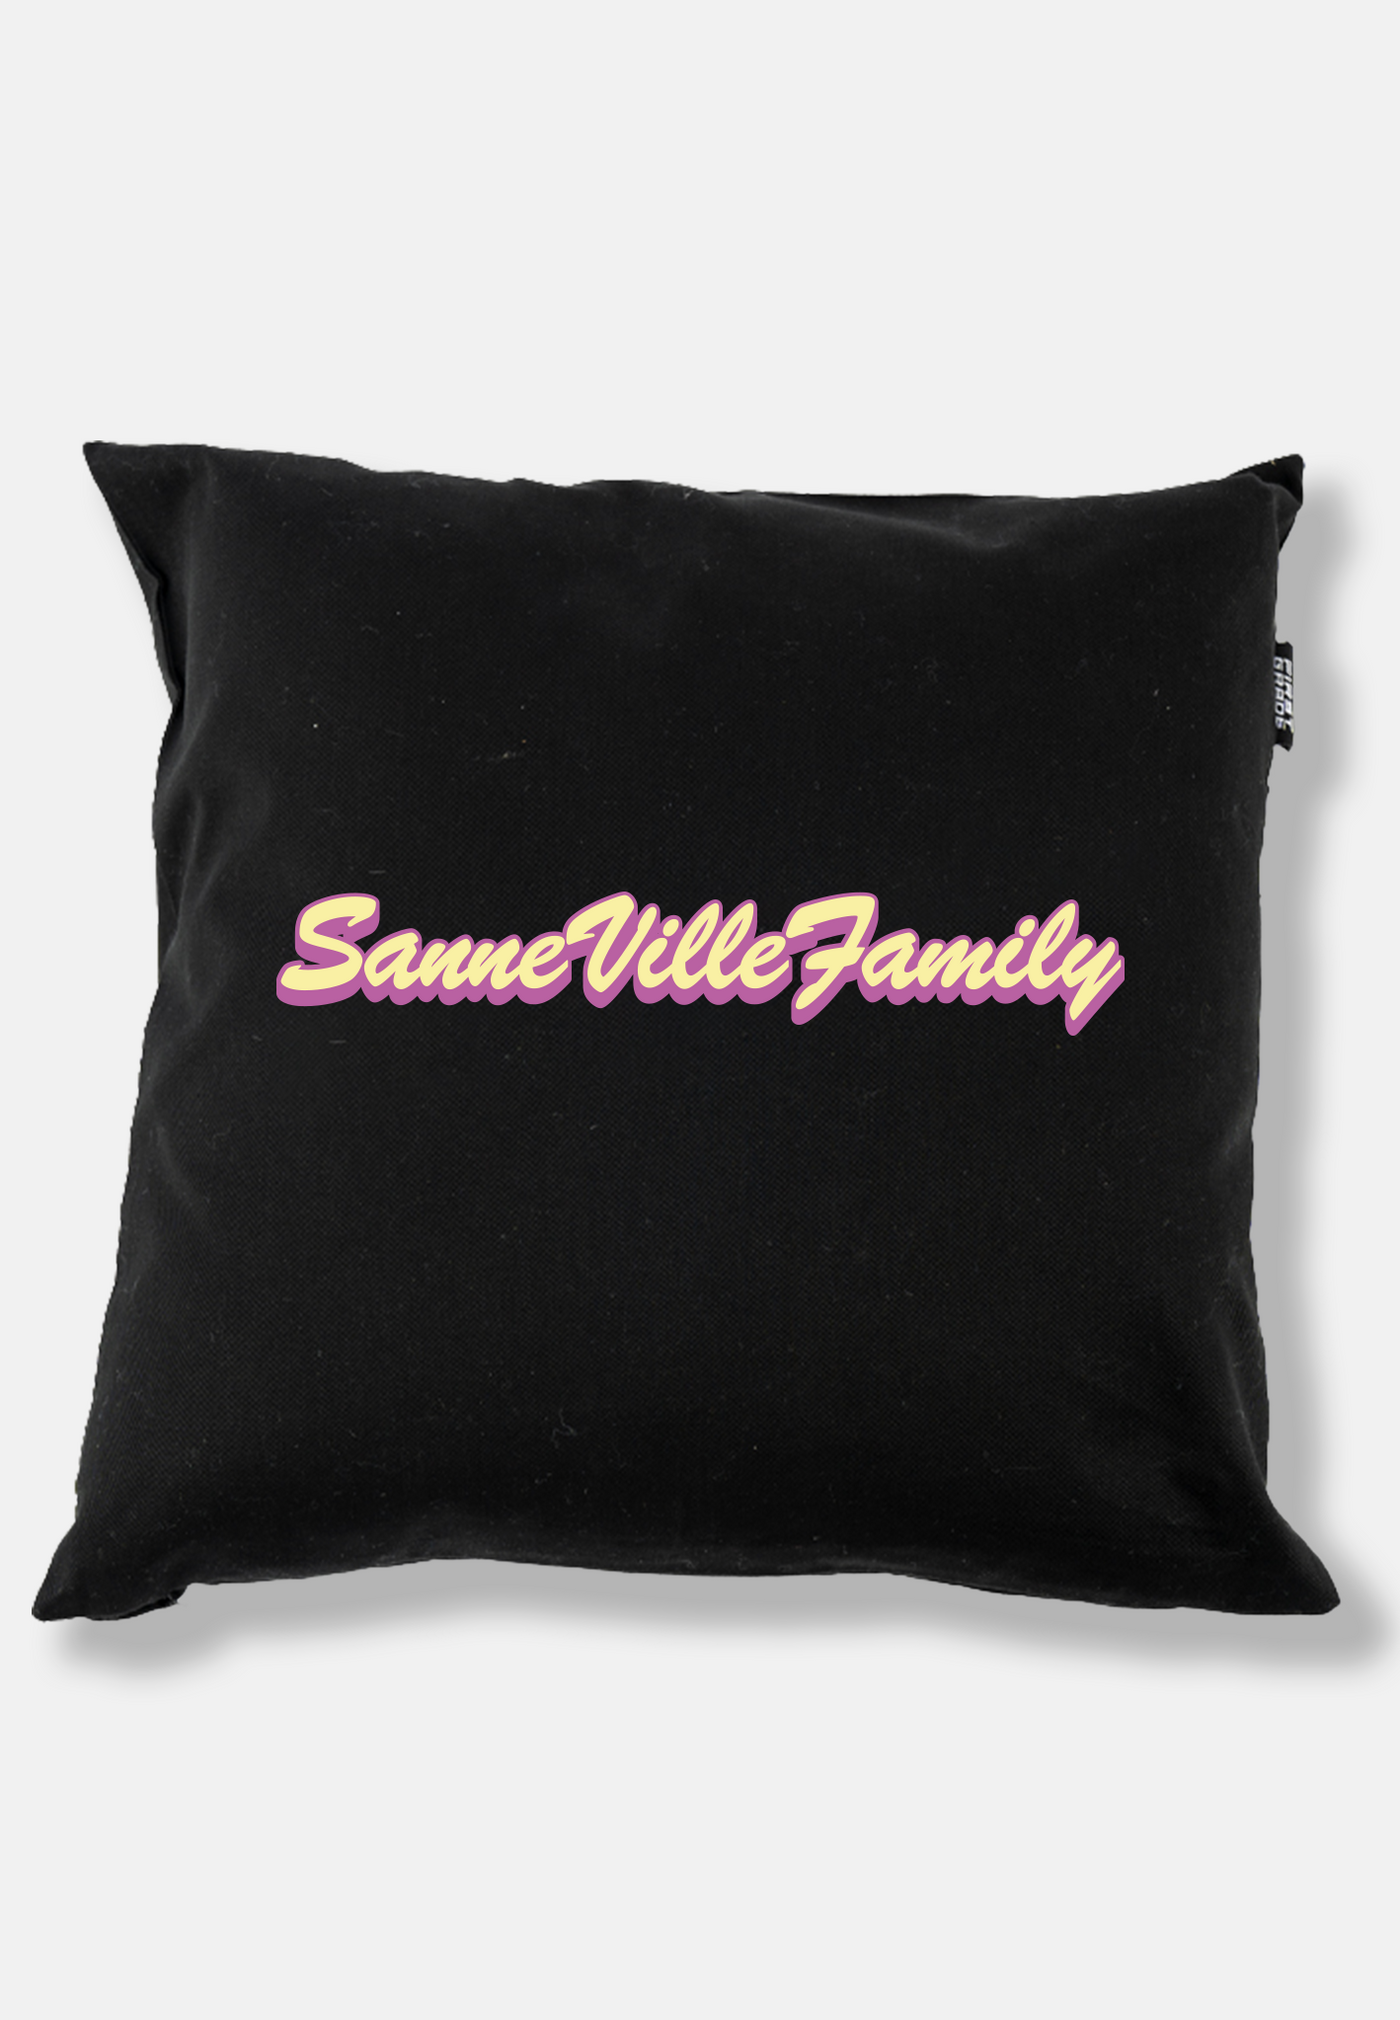 SanneVilleFamily - Text - Pillow cover